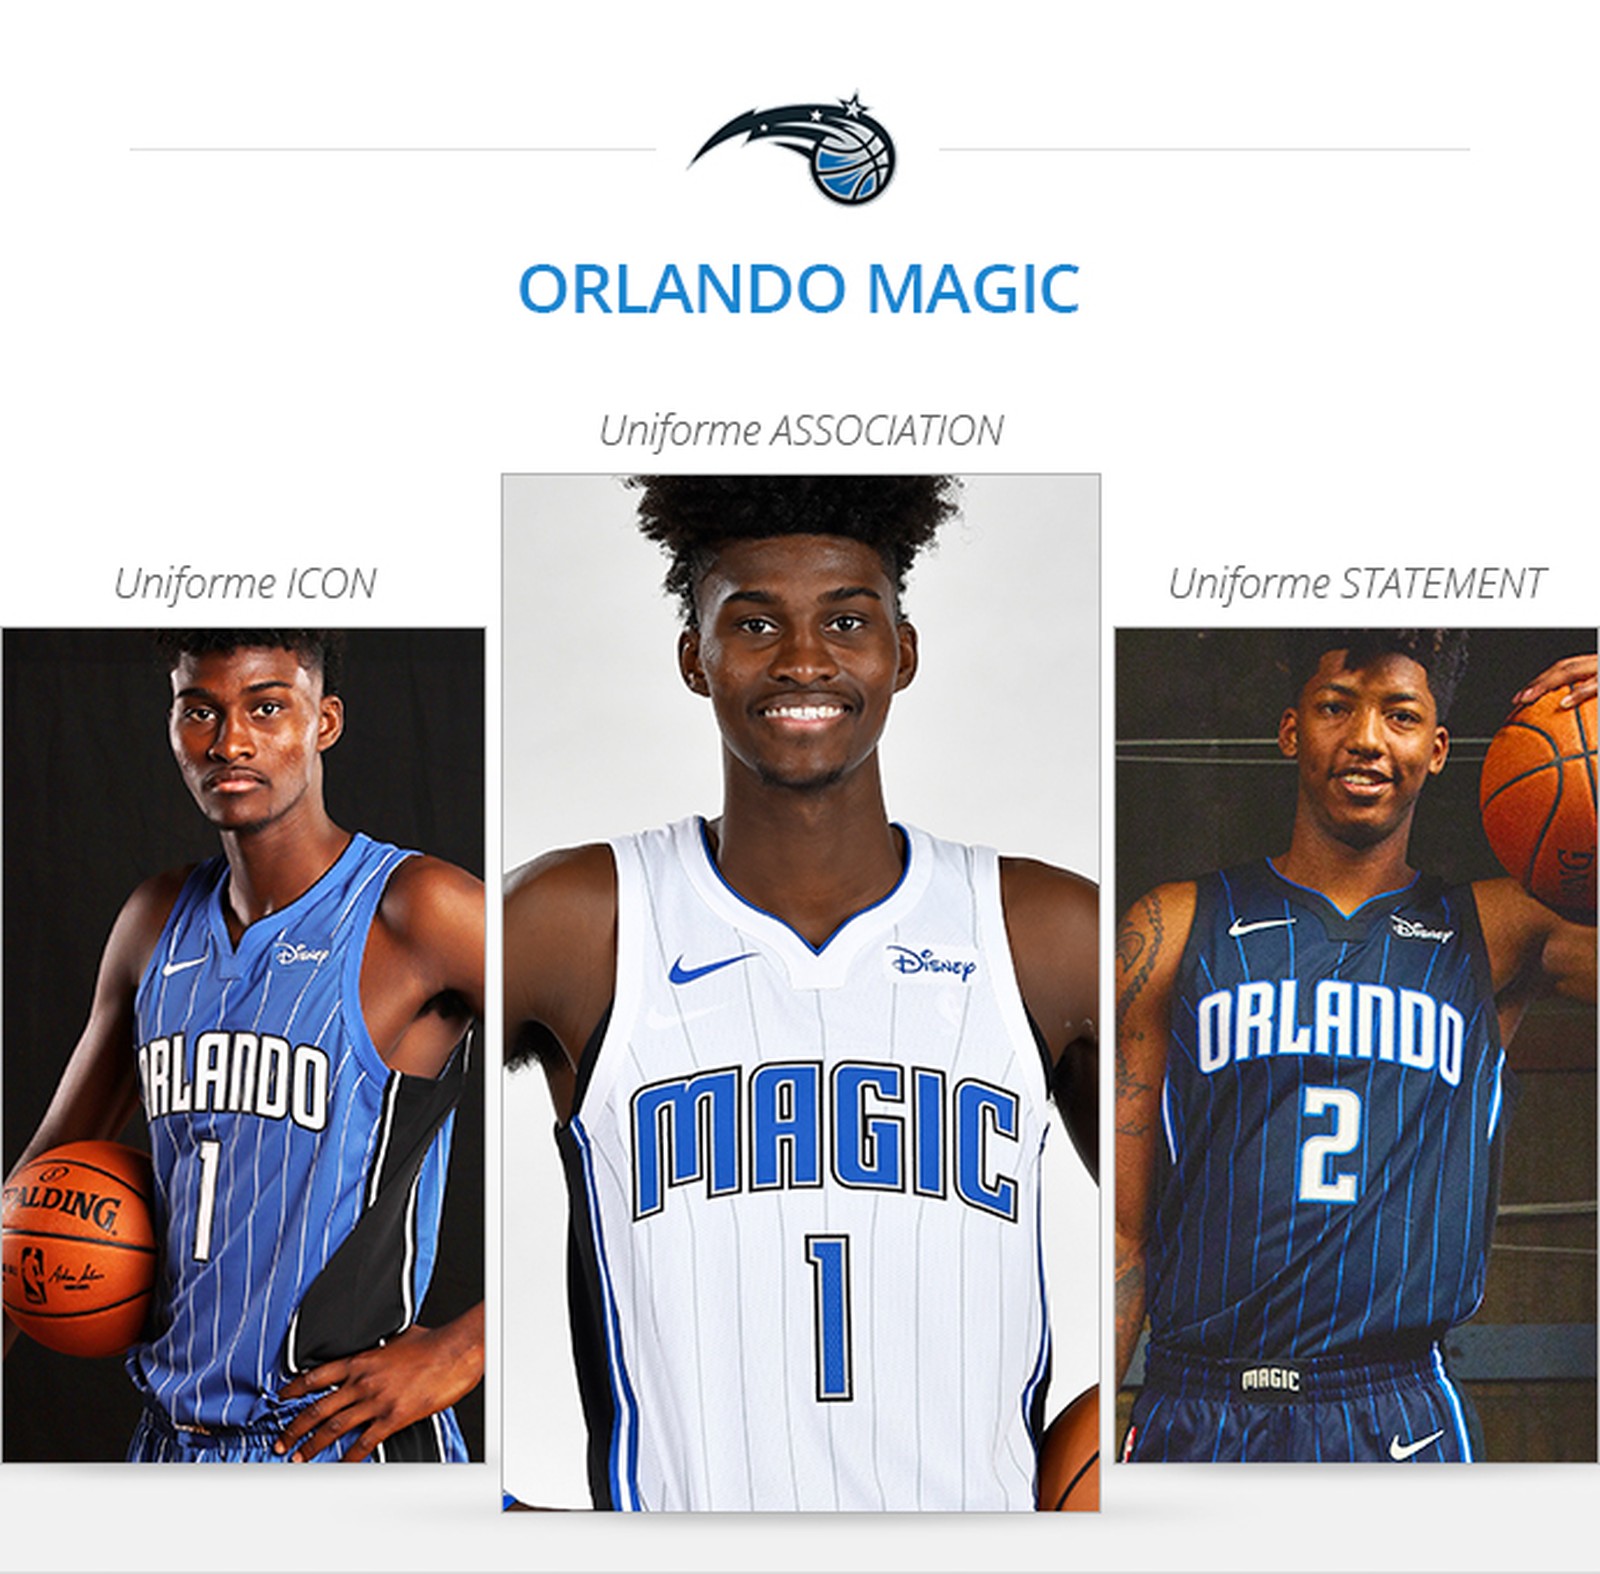 Uniformes Orlando Magic saison 2017/18